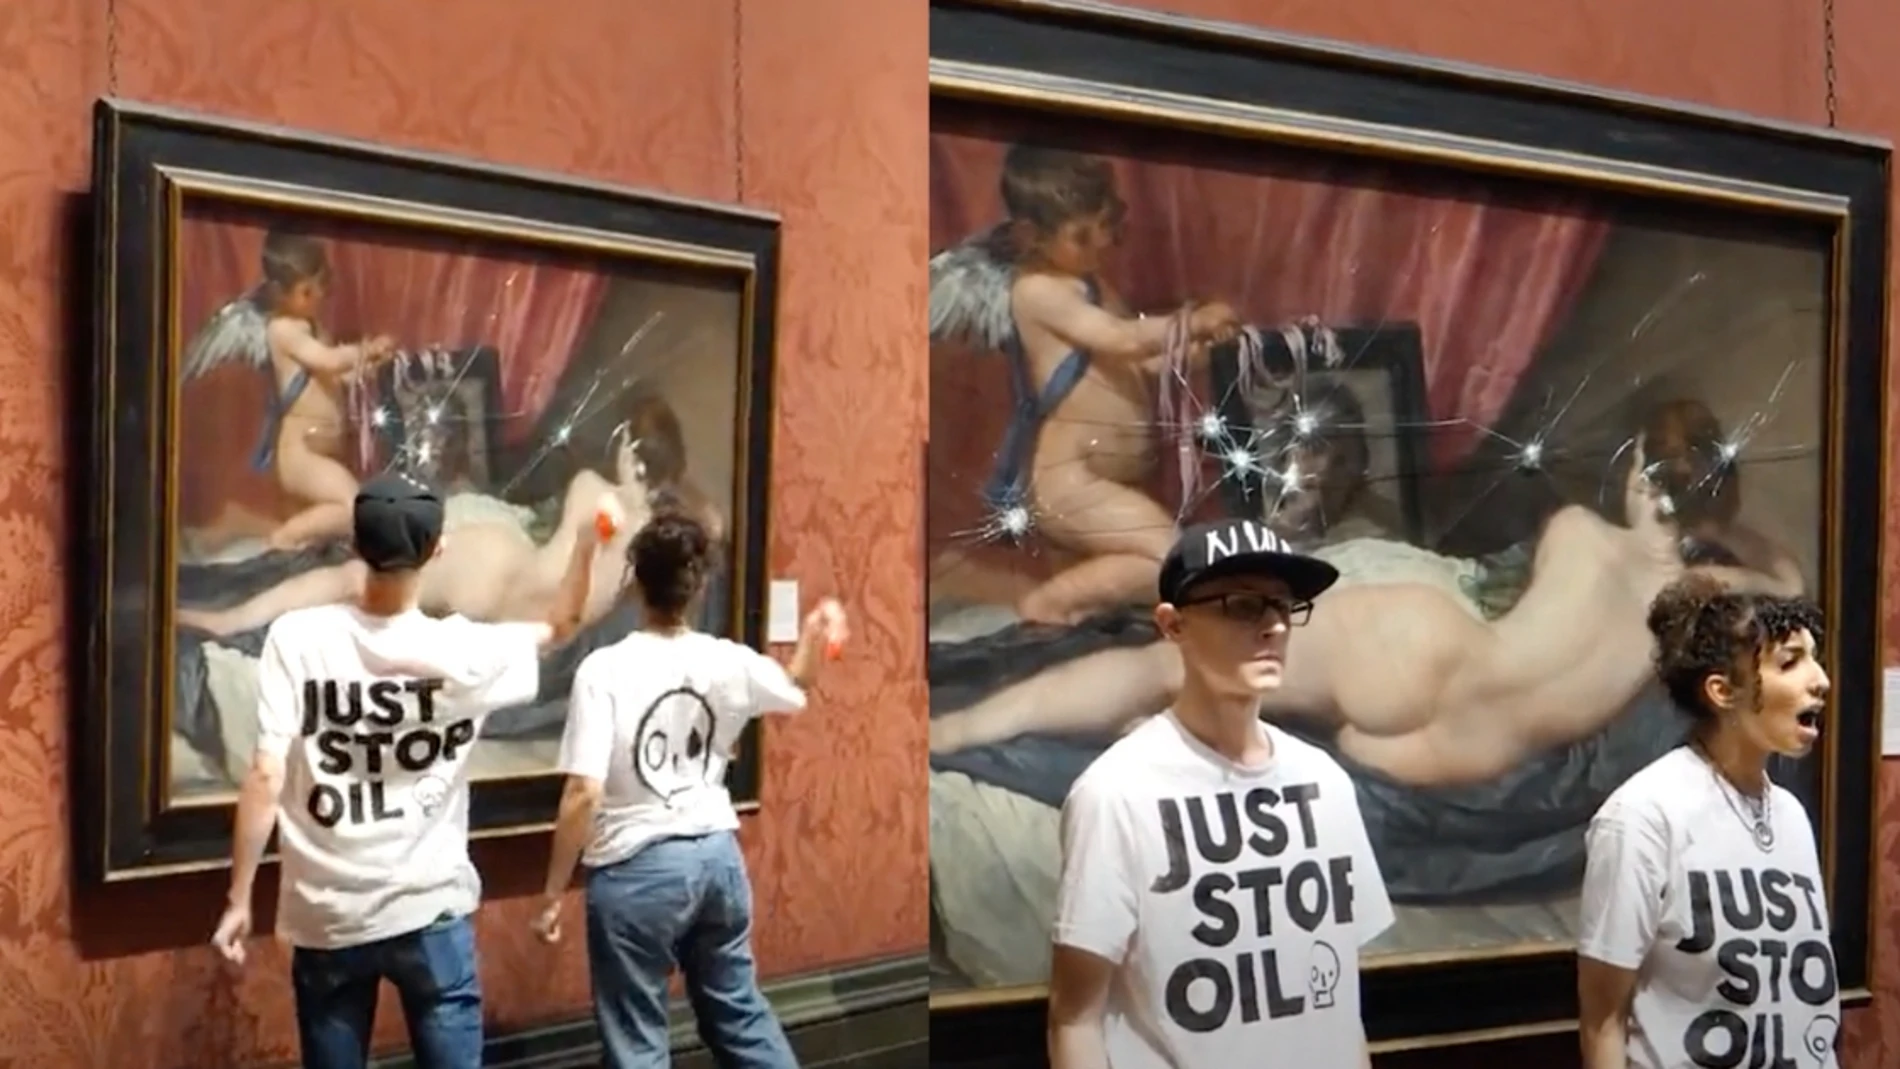 Activistas climáticos rompen a martillazos el cristal protector de una obra de Velázquez 